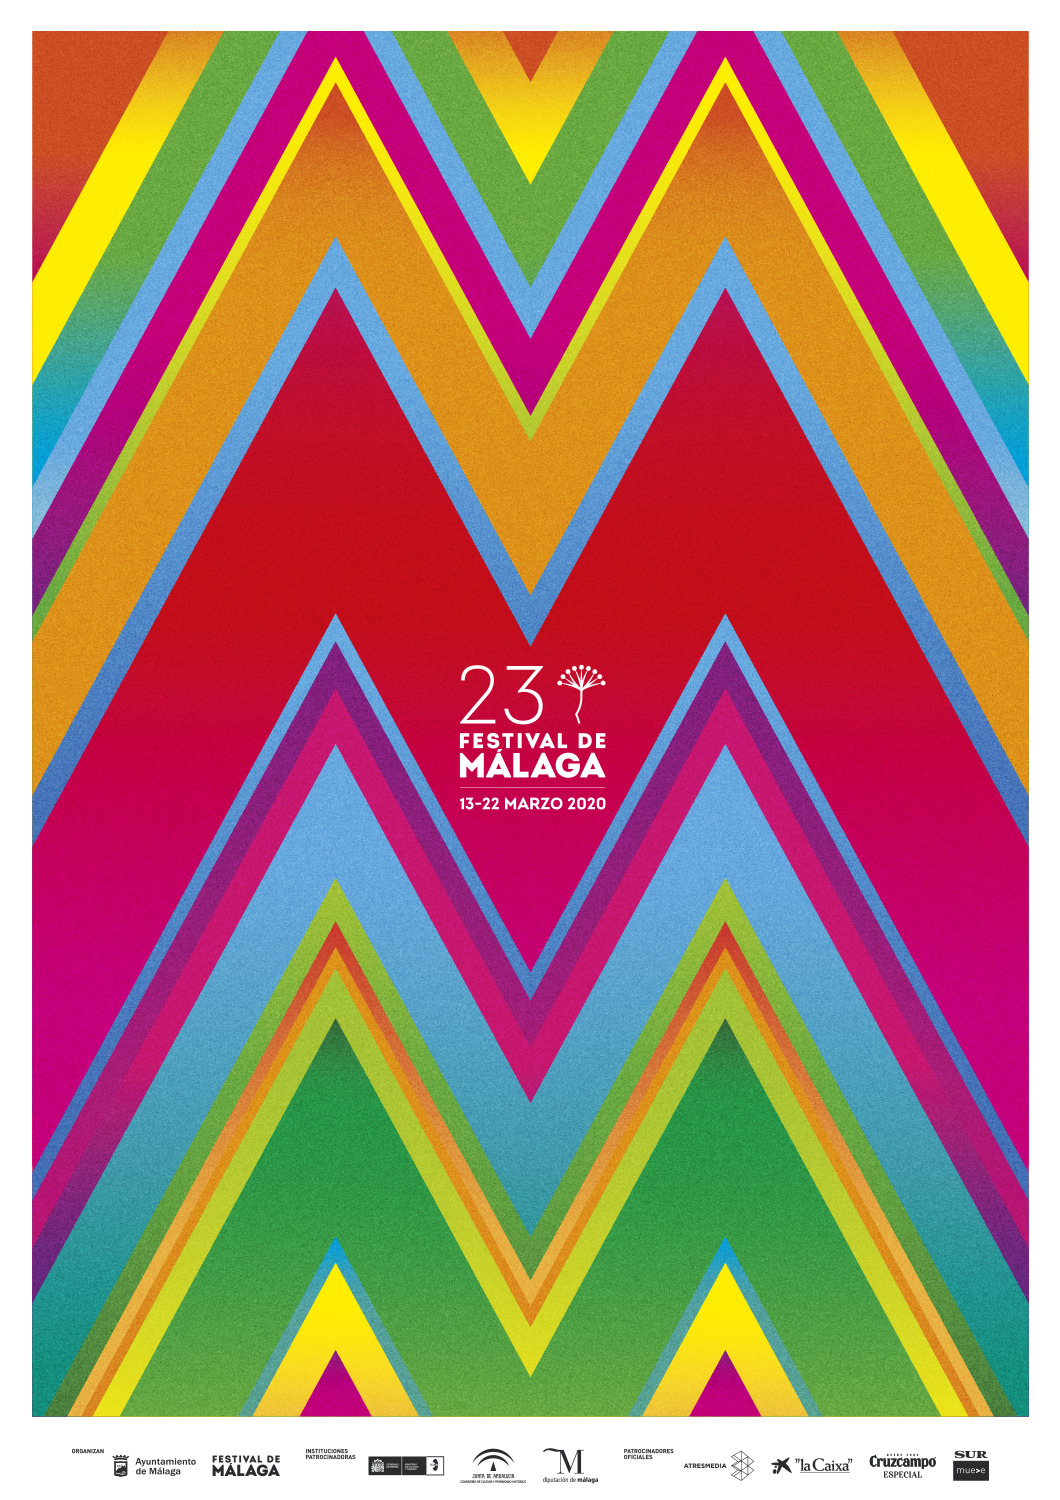 Extra Large TV Poster Image for Festival de Málaga 